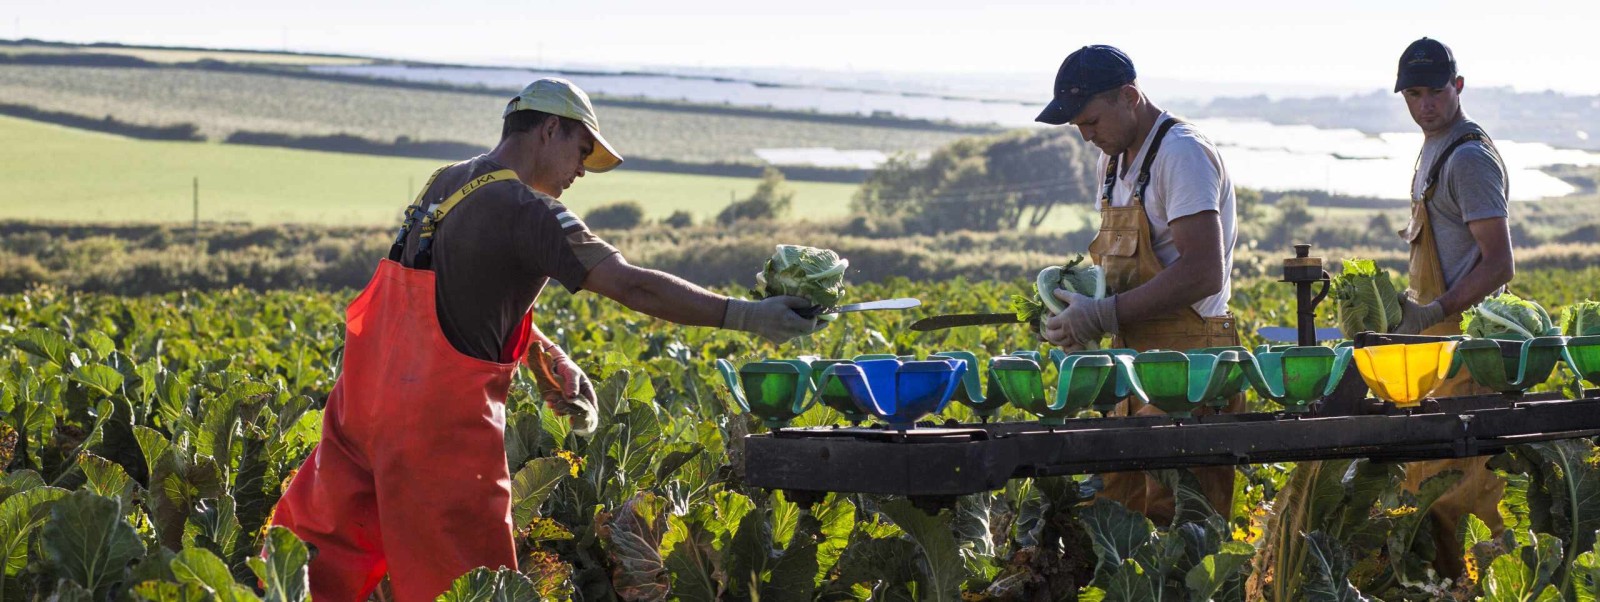 image showing cauliflower pickers at work 